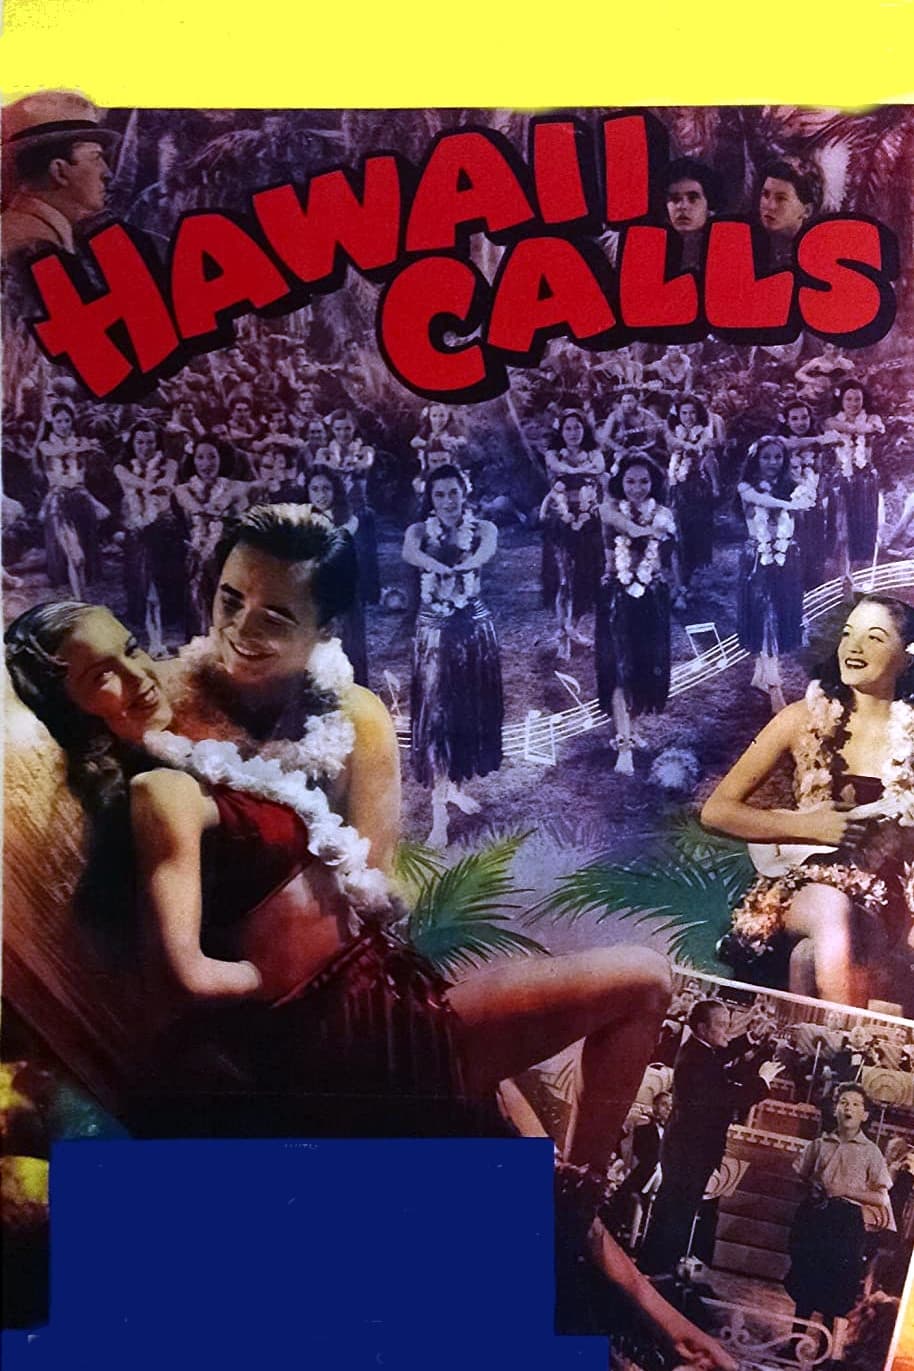 Hawaii Calls (1938)